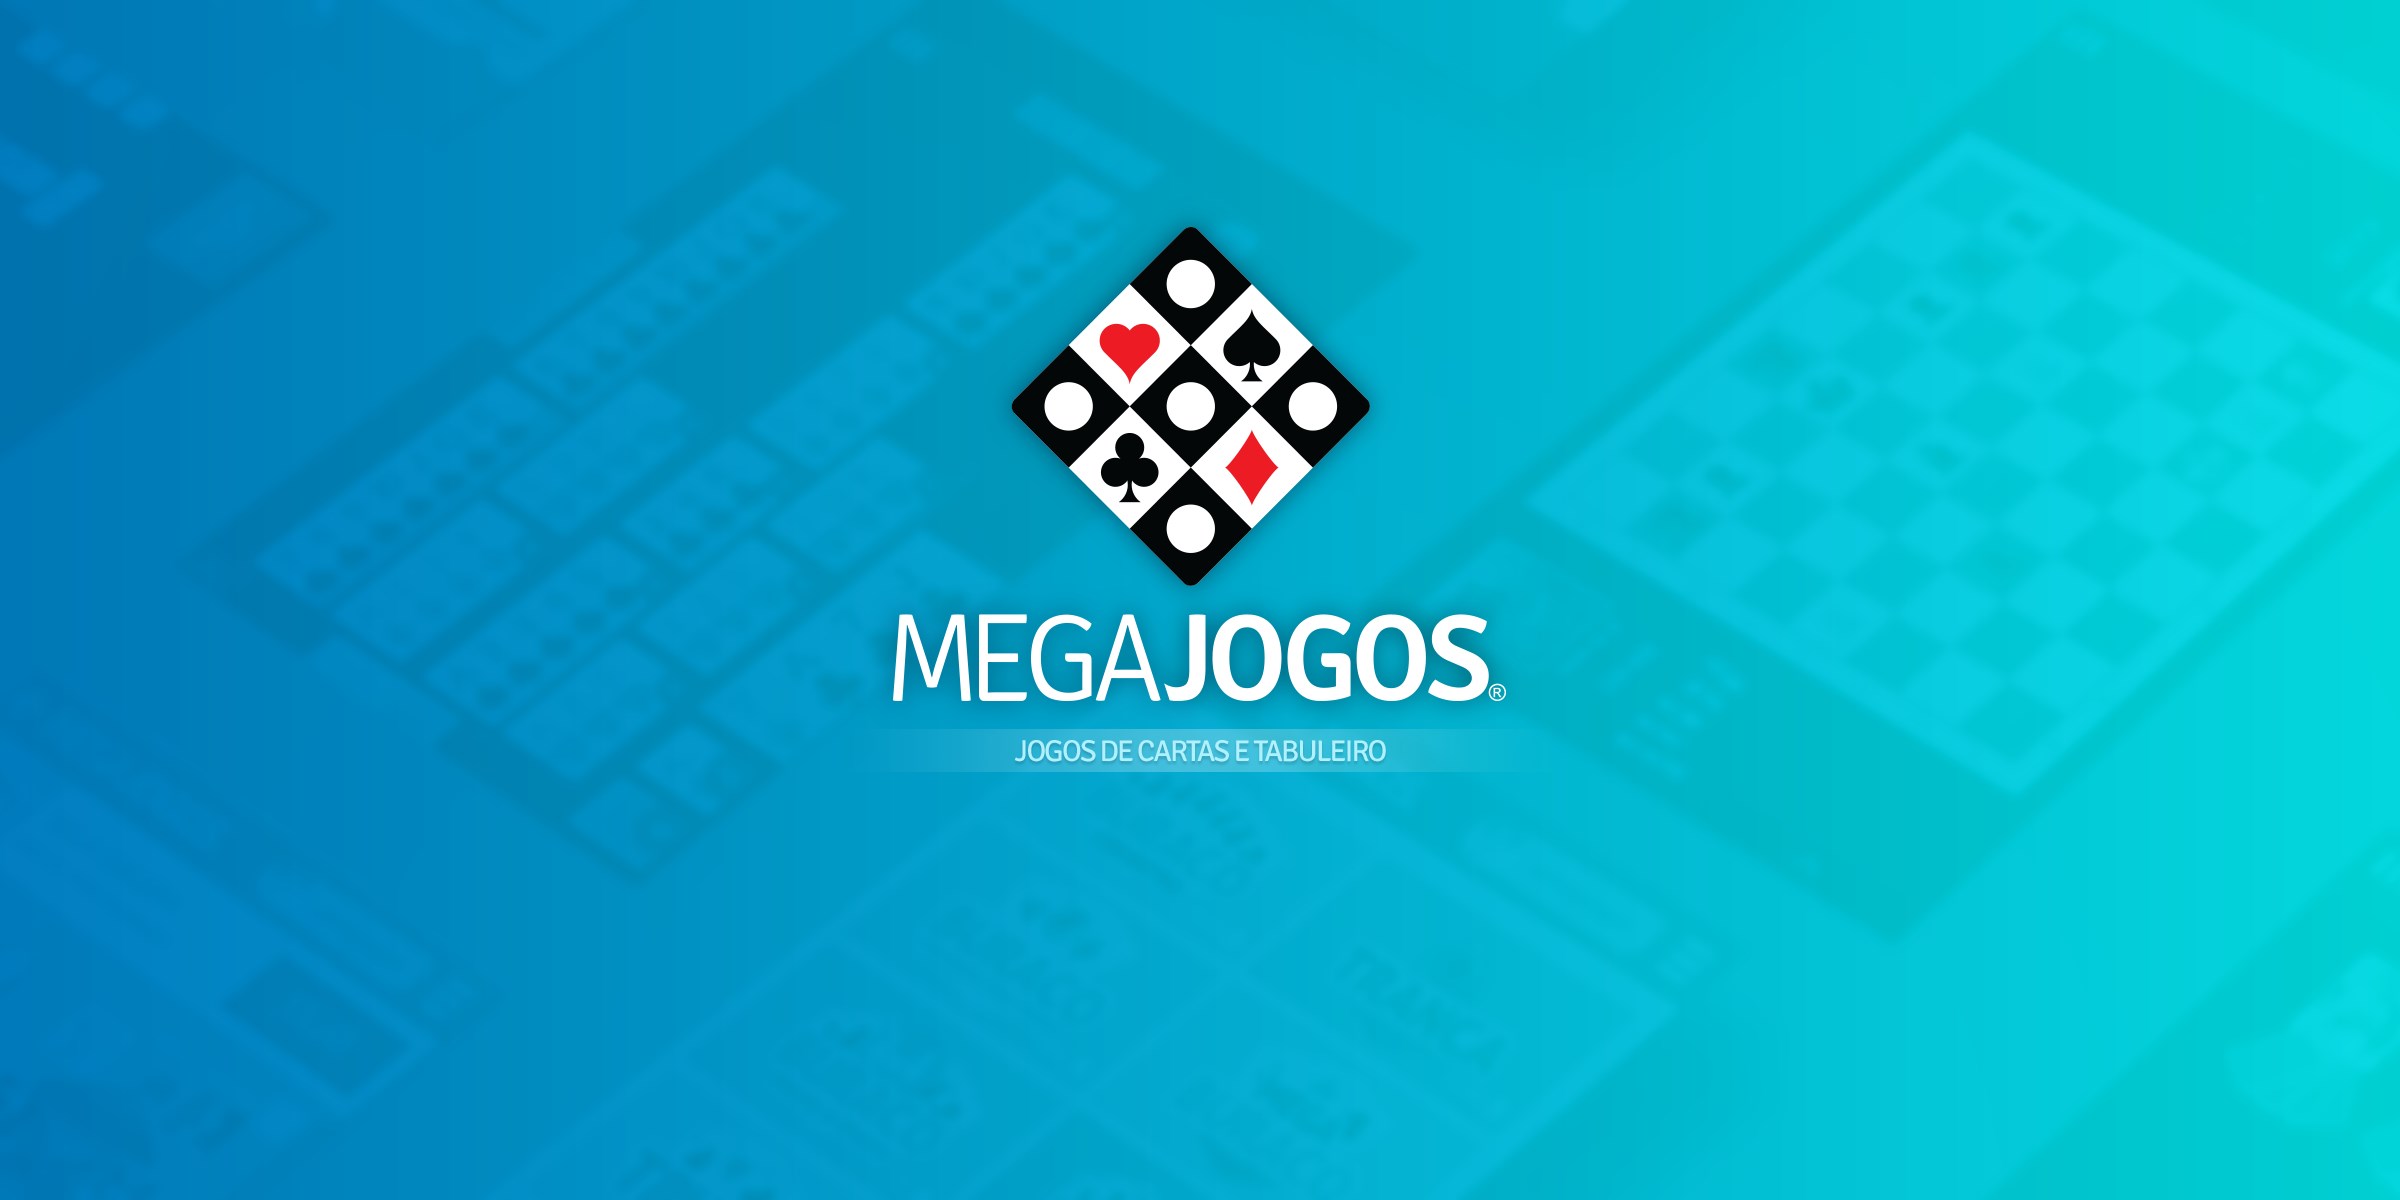 Get MegaJogos - Microsoft Store